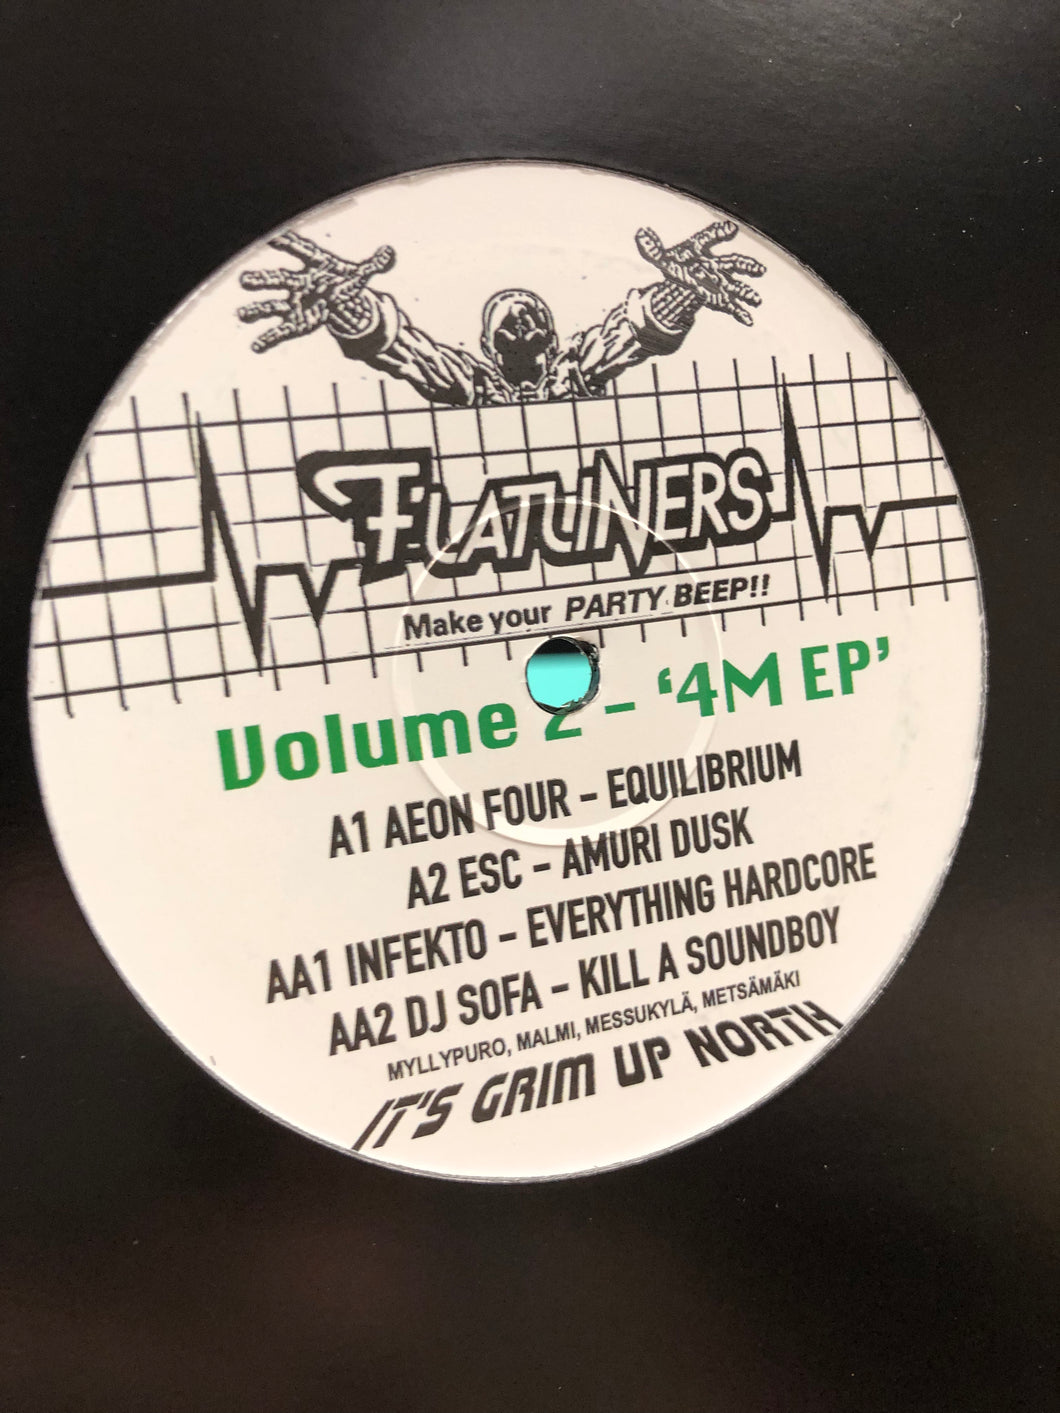 Flatliners: Volume 2 - ’4M EP’, UK 2022